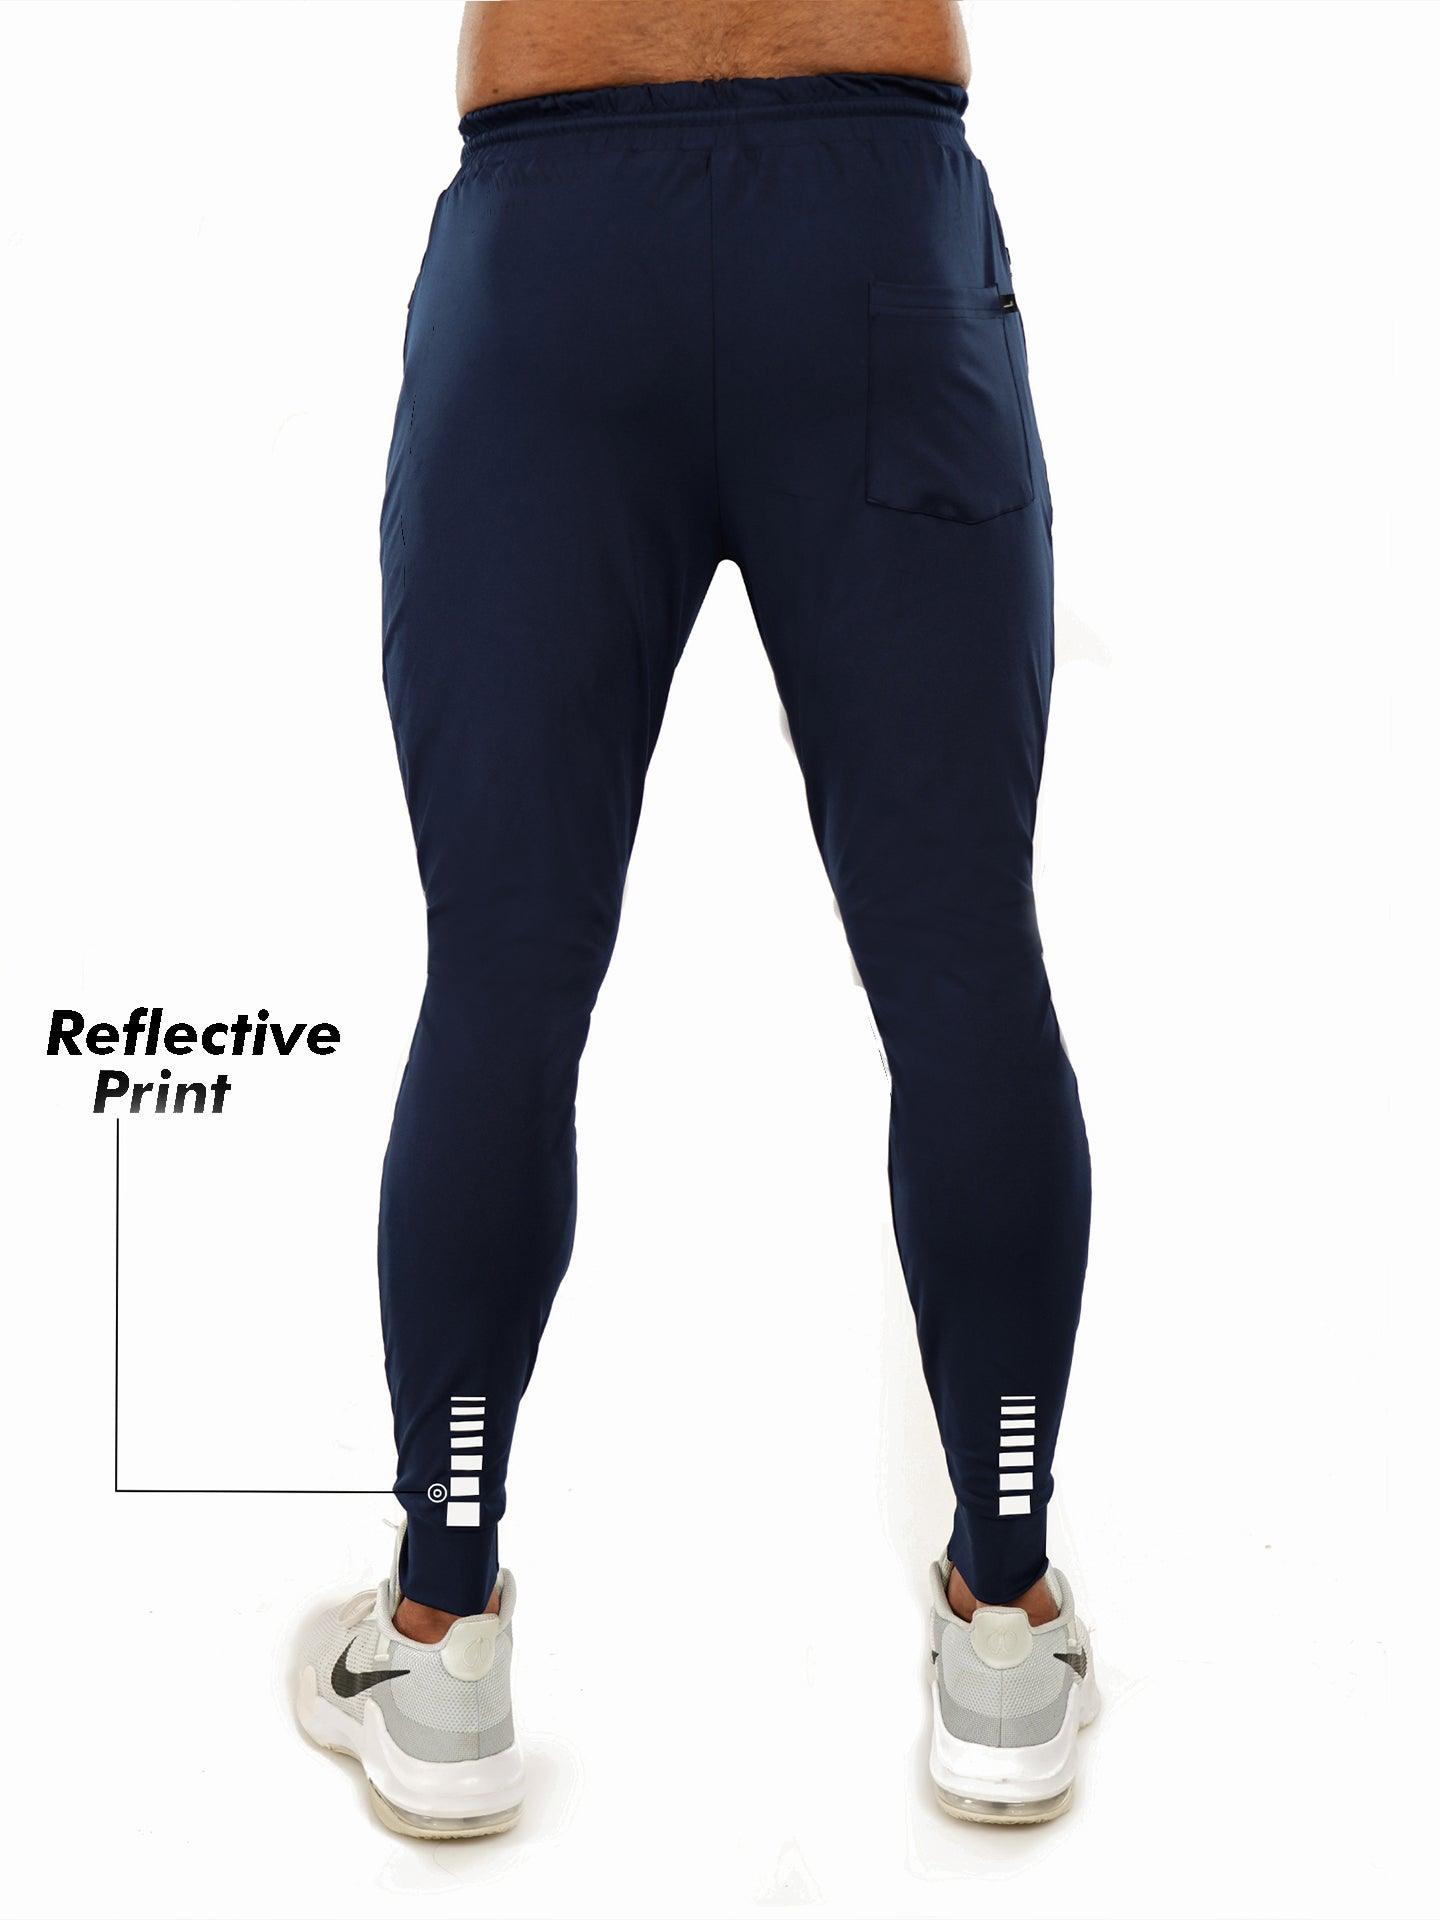 GymX Intense Blue leggings - Sale at Rs 749.00